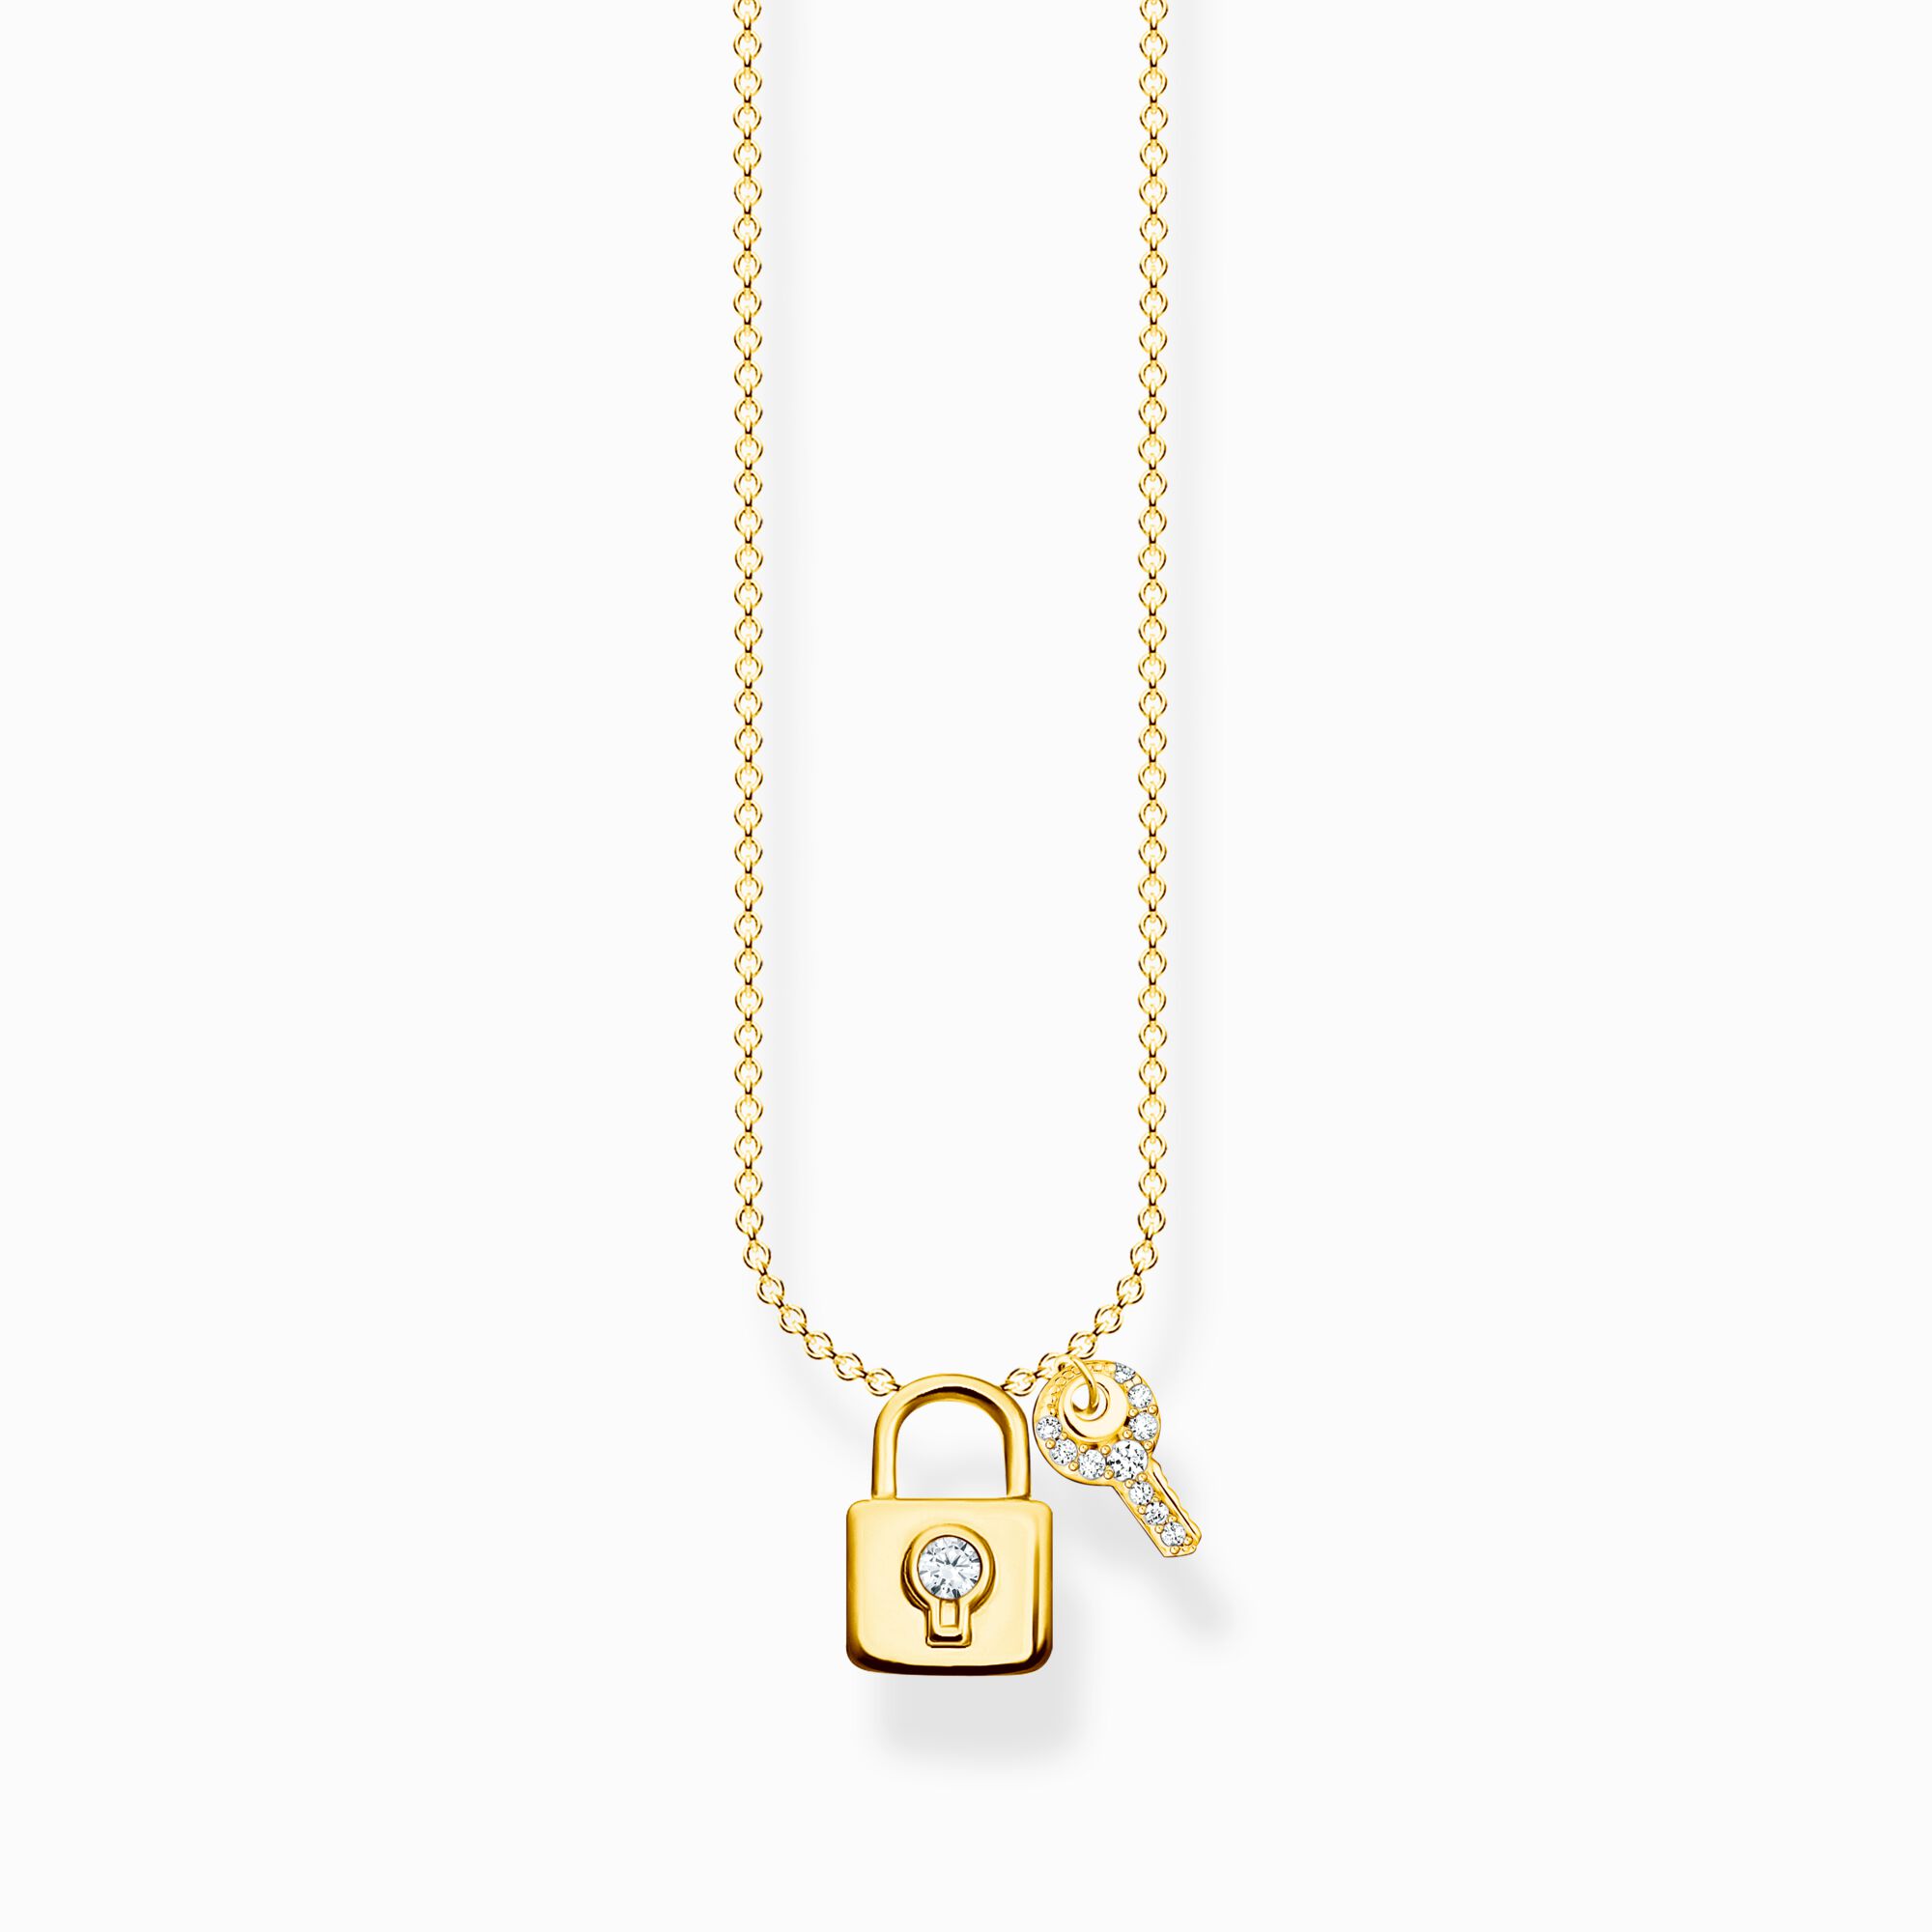 Matching Heart Key Necklace & Lock Bracelet Jewelry Set for